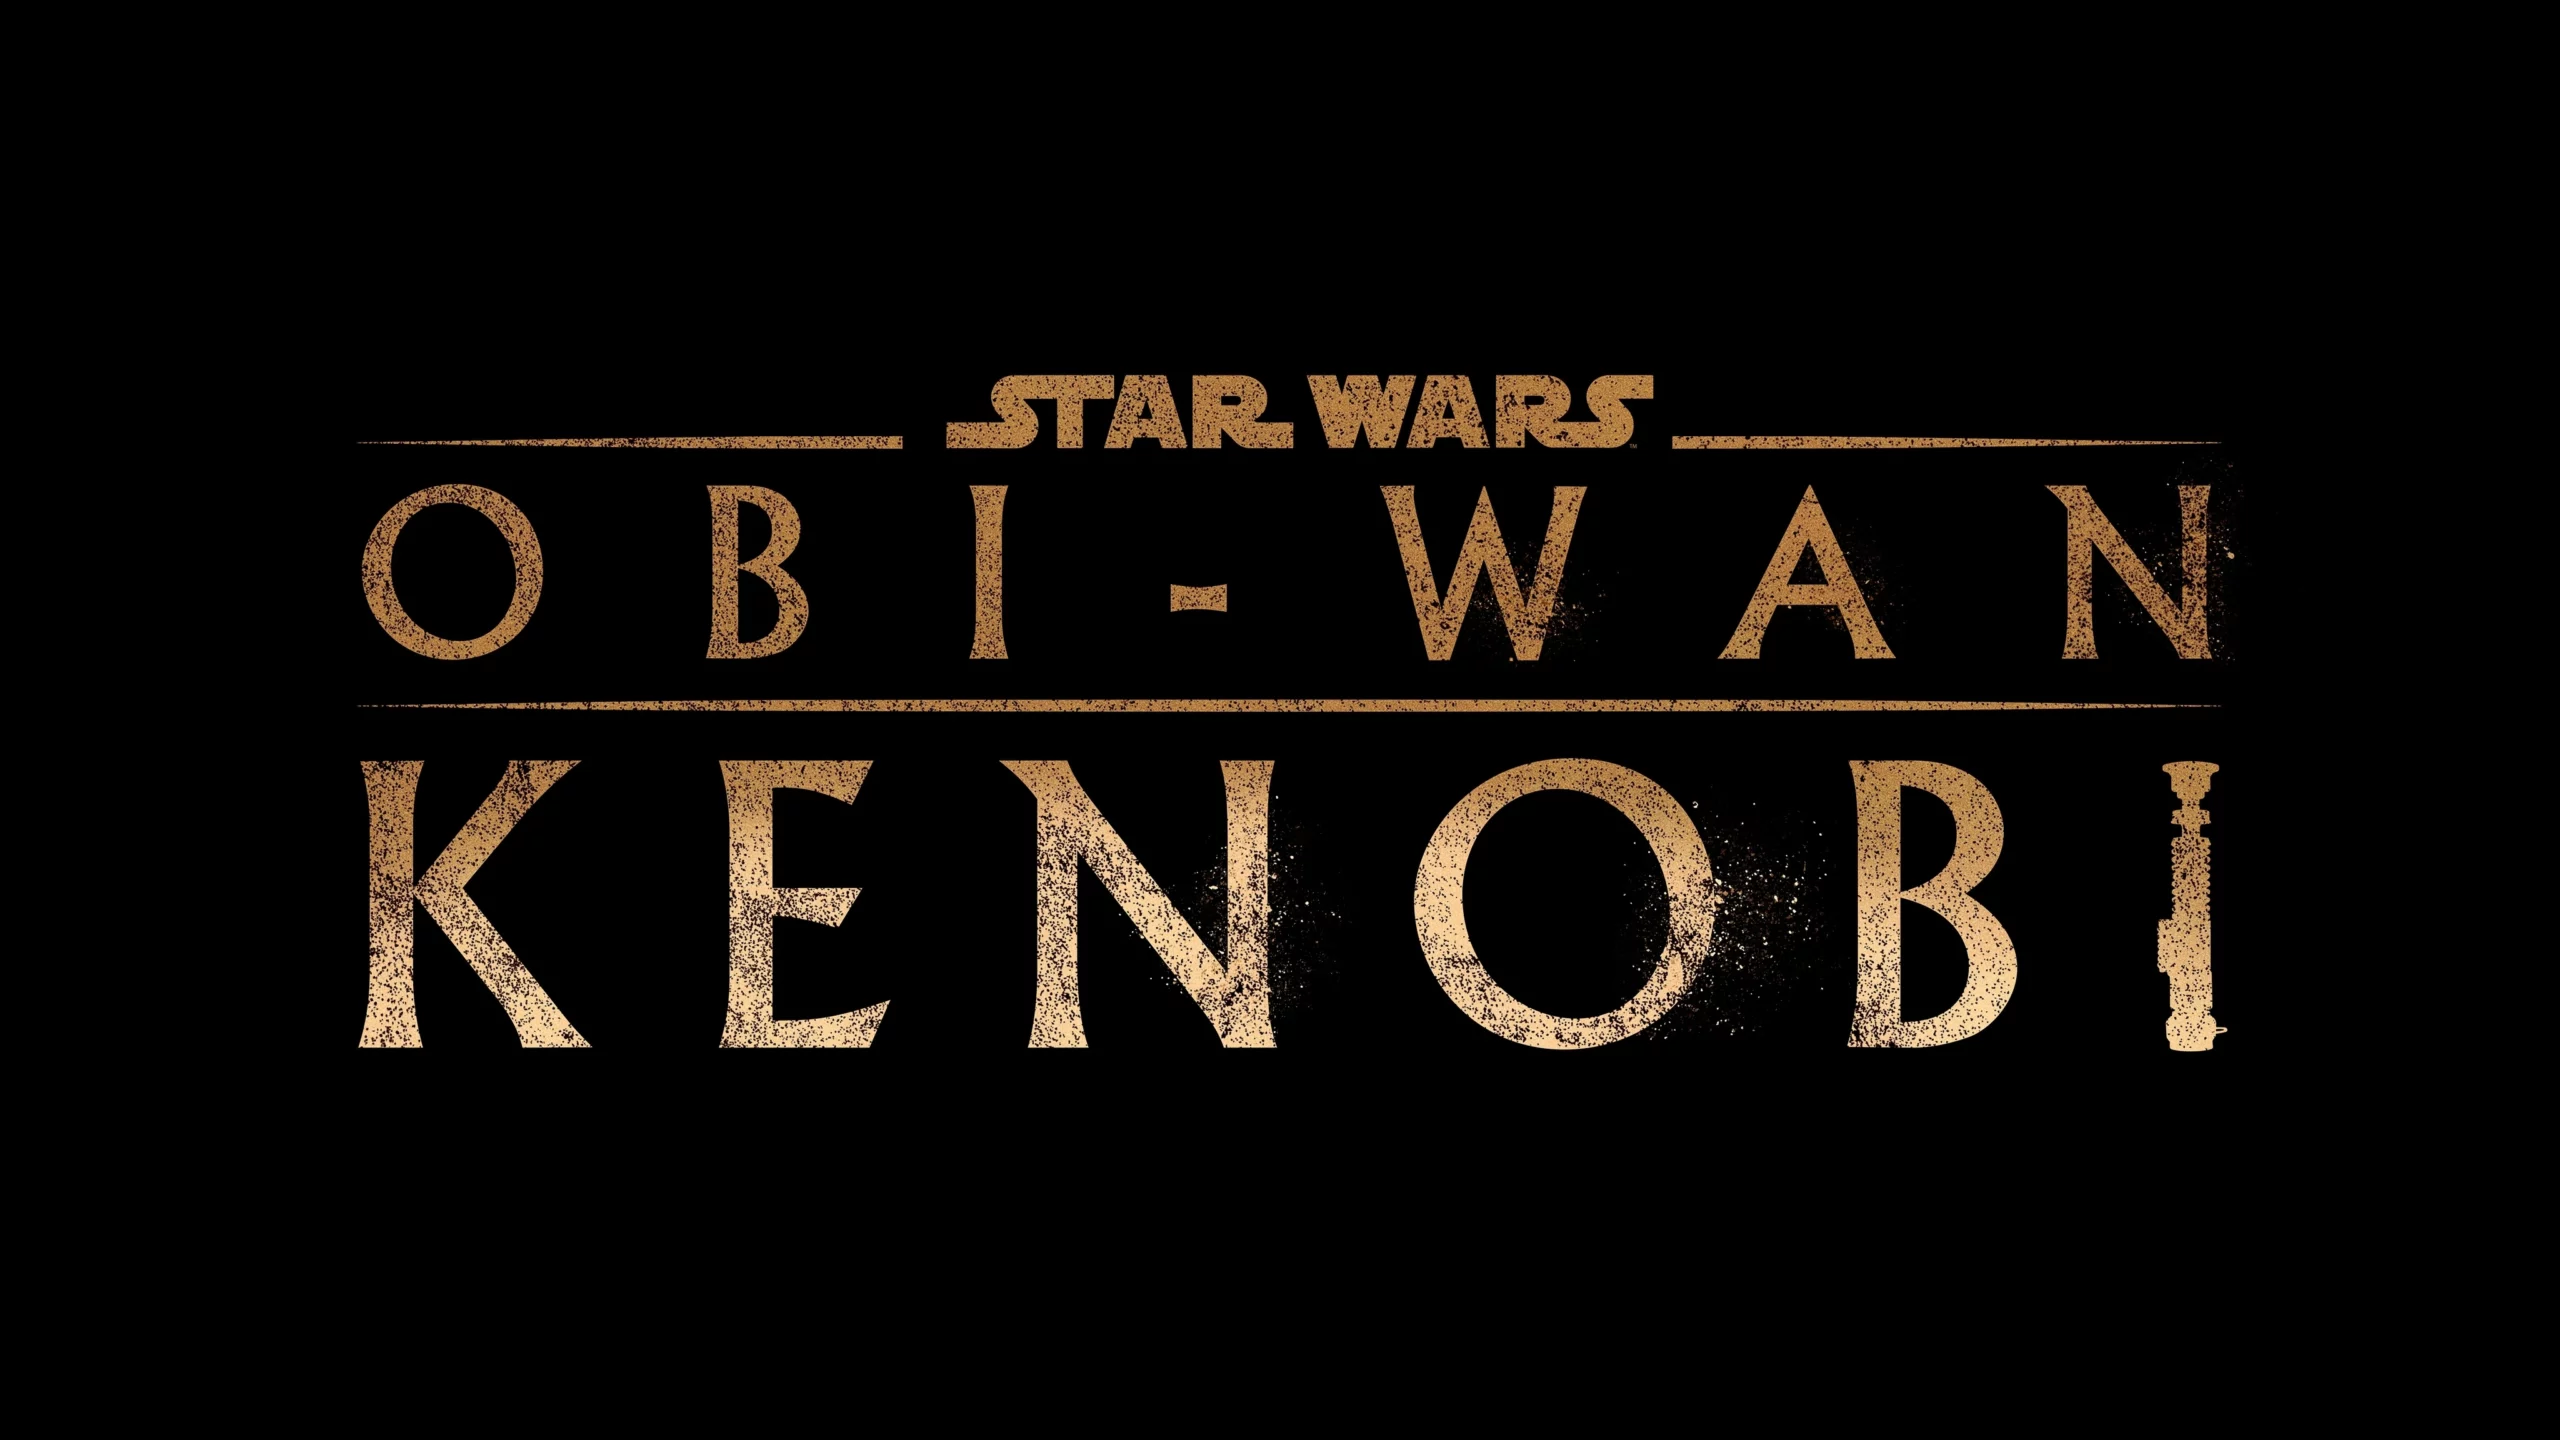 Obi-Wan Kenobi Limited Series to air on Disney+